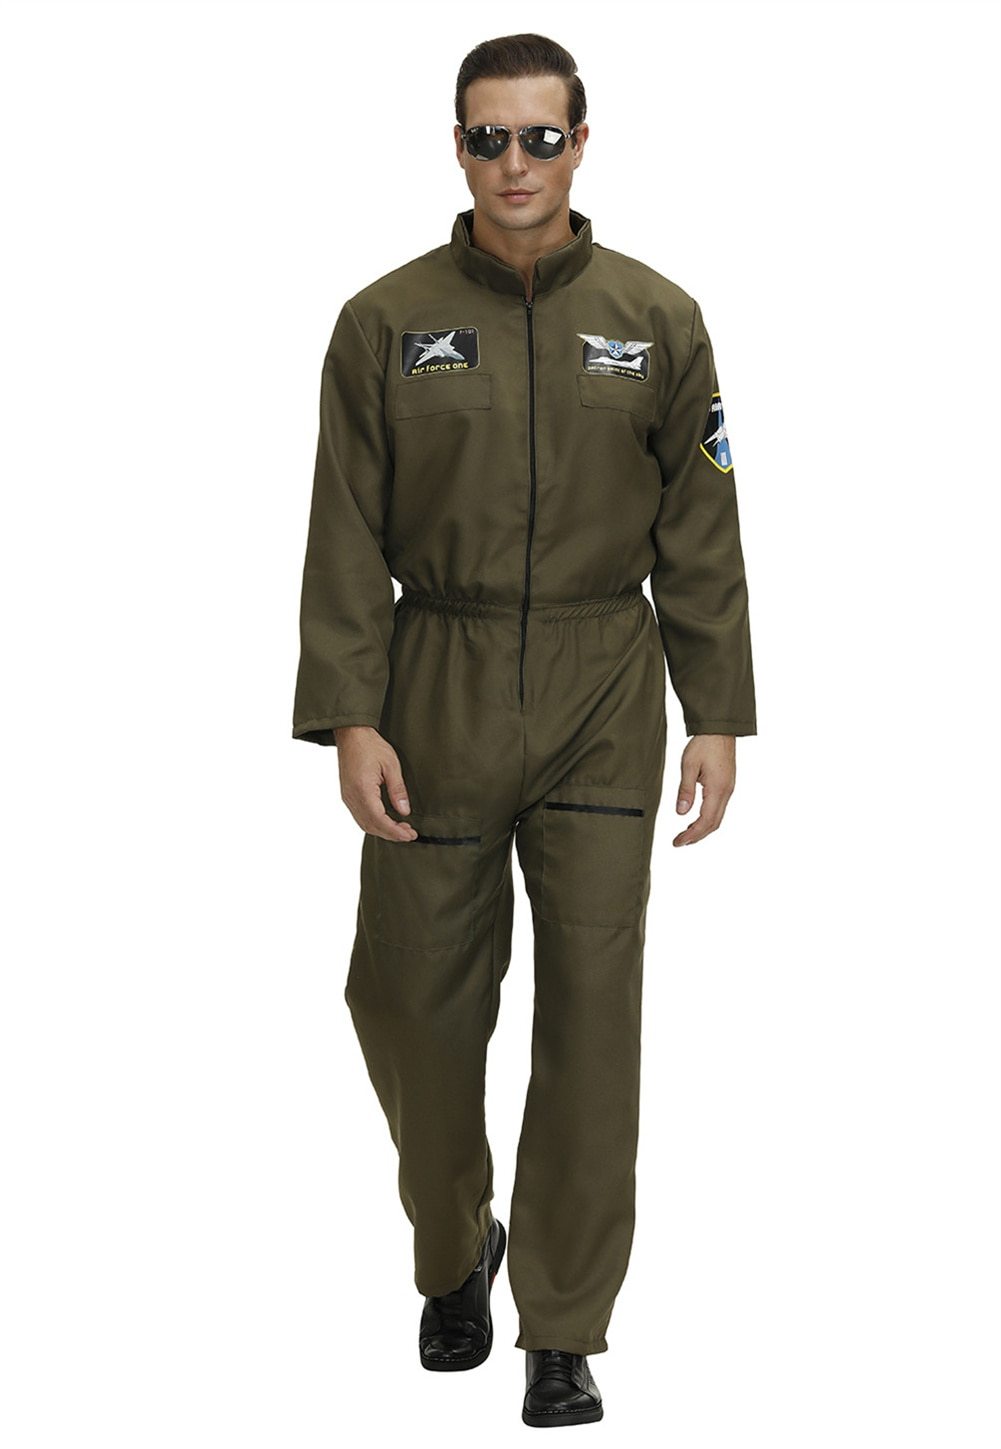 Fighter Pilot & Aviator Style Jumpsuit for Men & Women (Halloween)